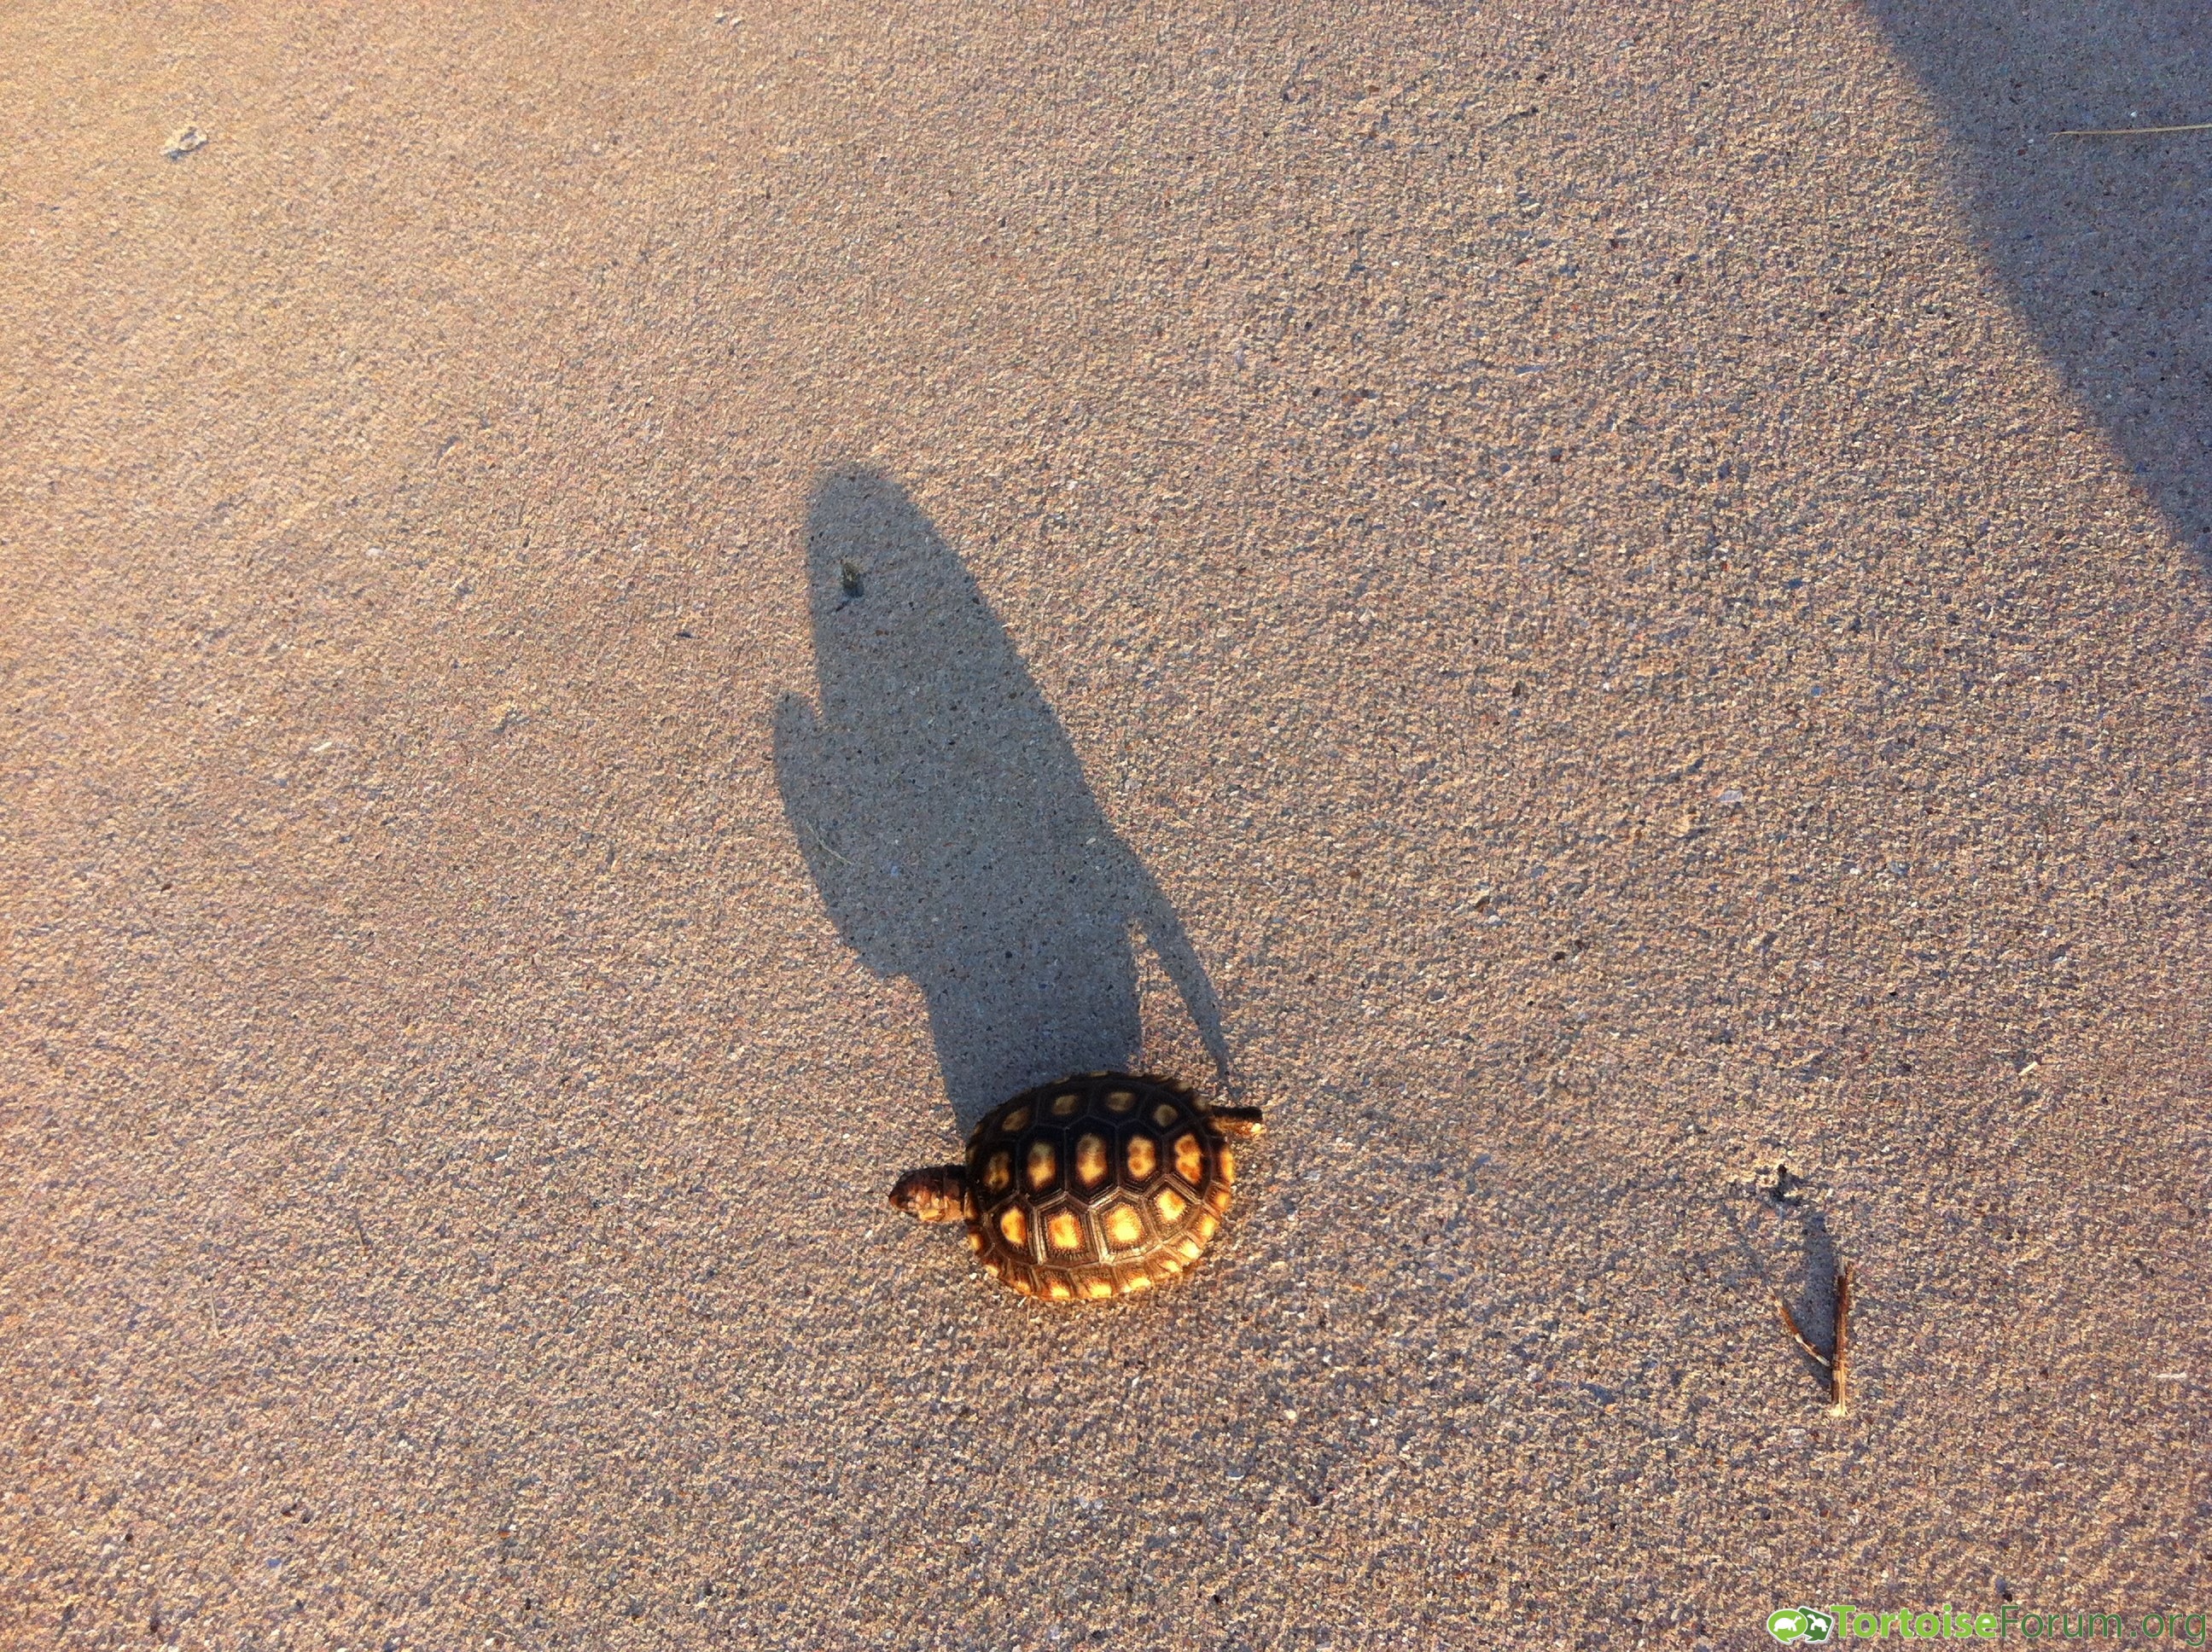 Tortoise-shaped shadow